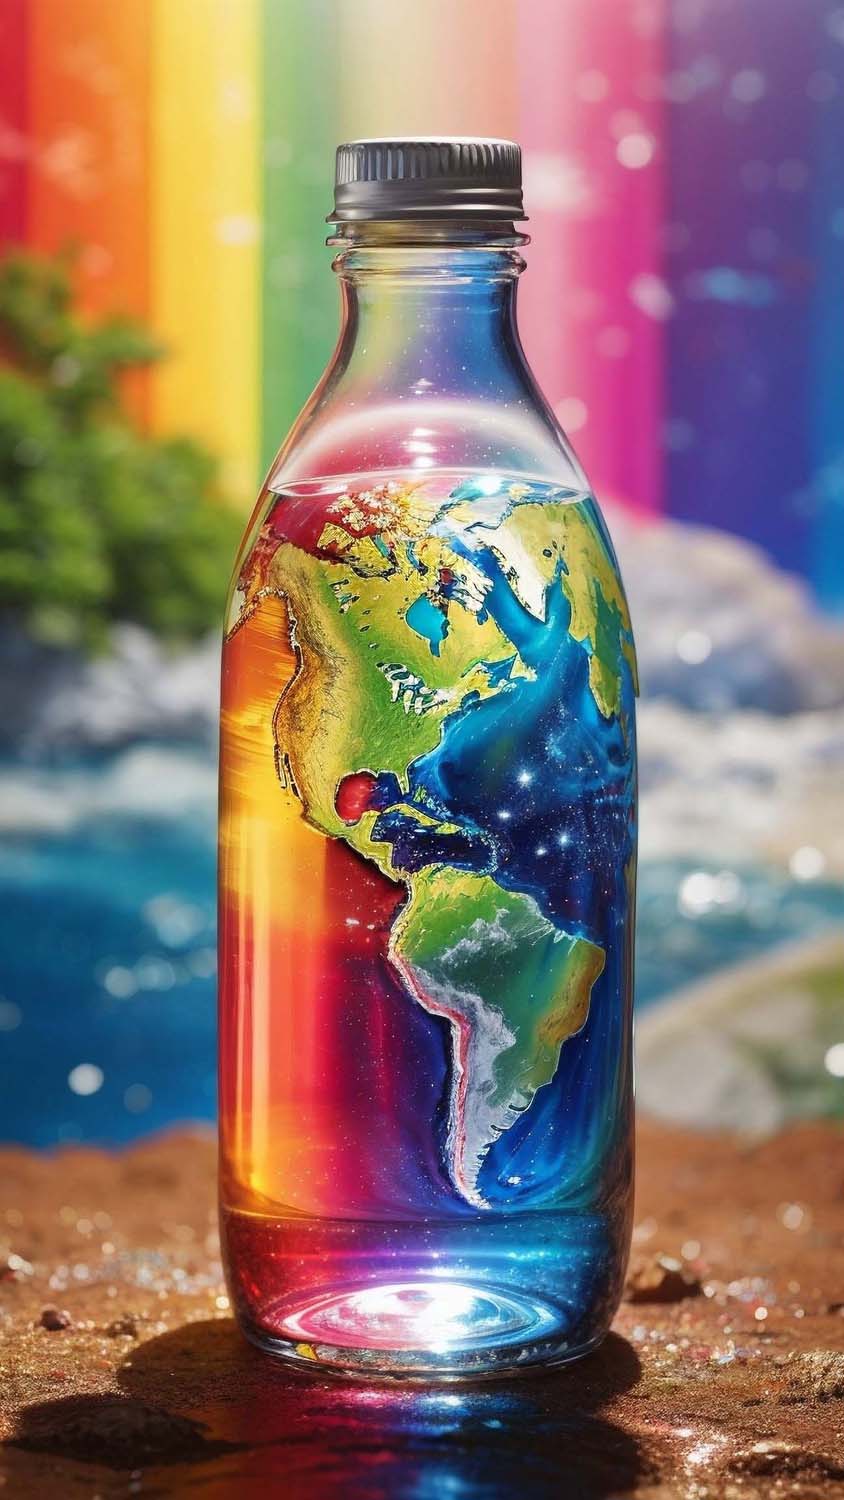 Earth Globe in Glass iPhone Wallpaper 4K